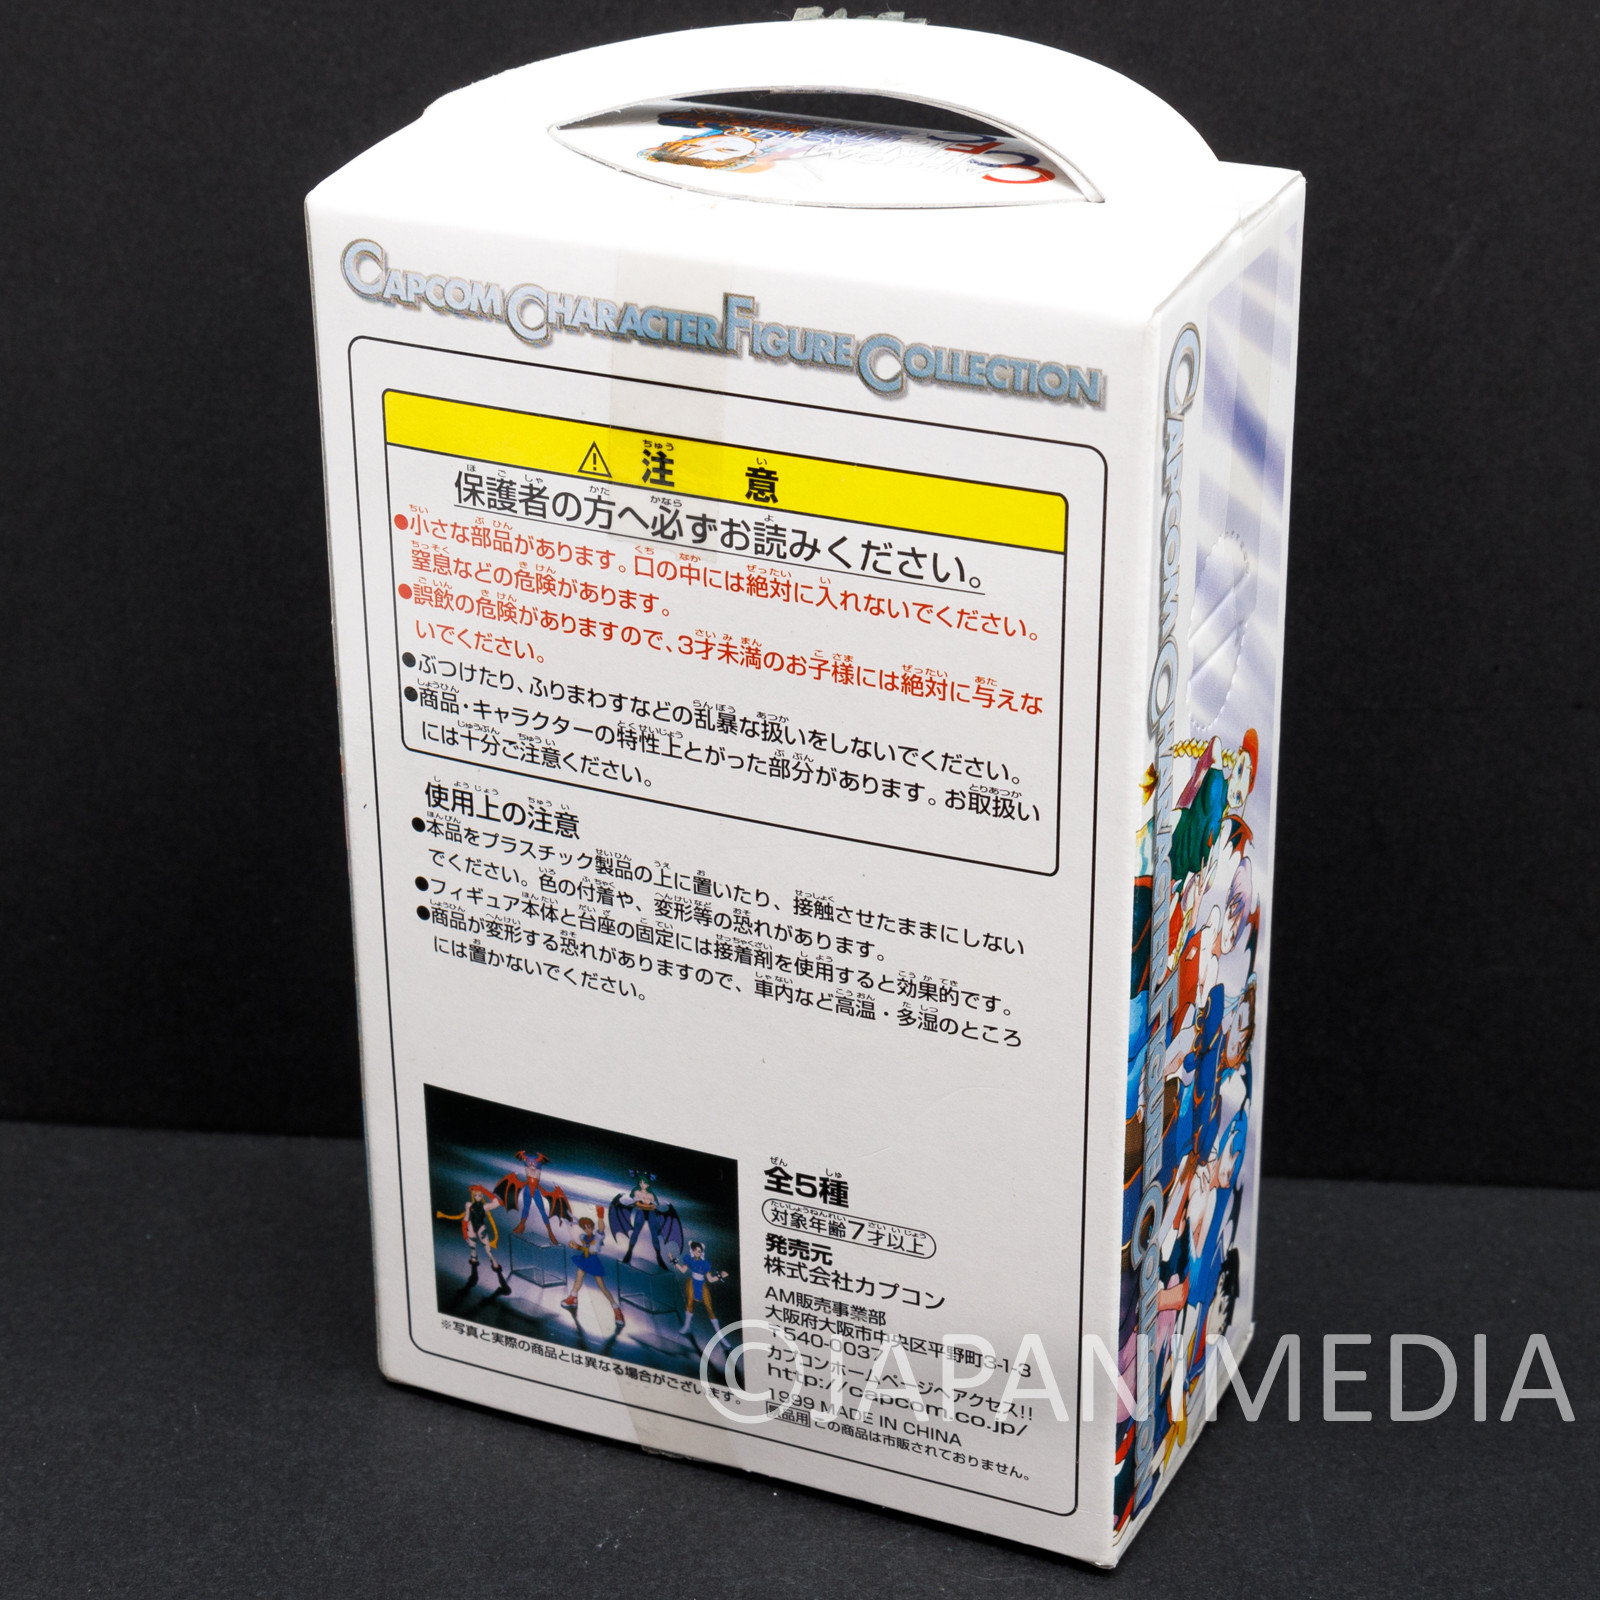 Street Fighter 2 SAKURA Capcom Character Figure Collection 1999 JAPAN GAME